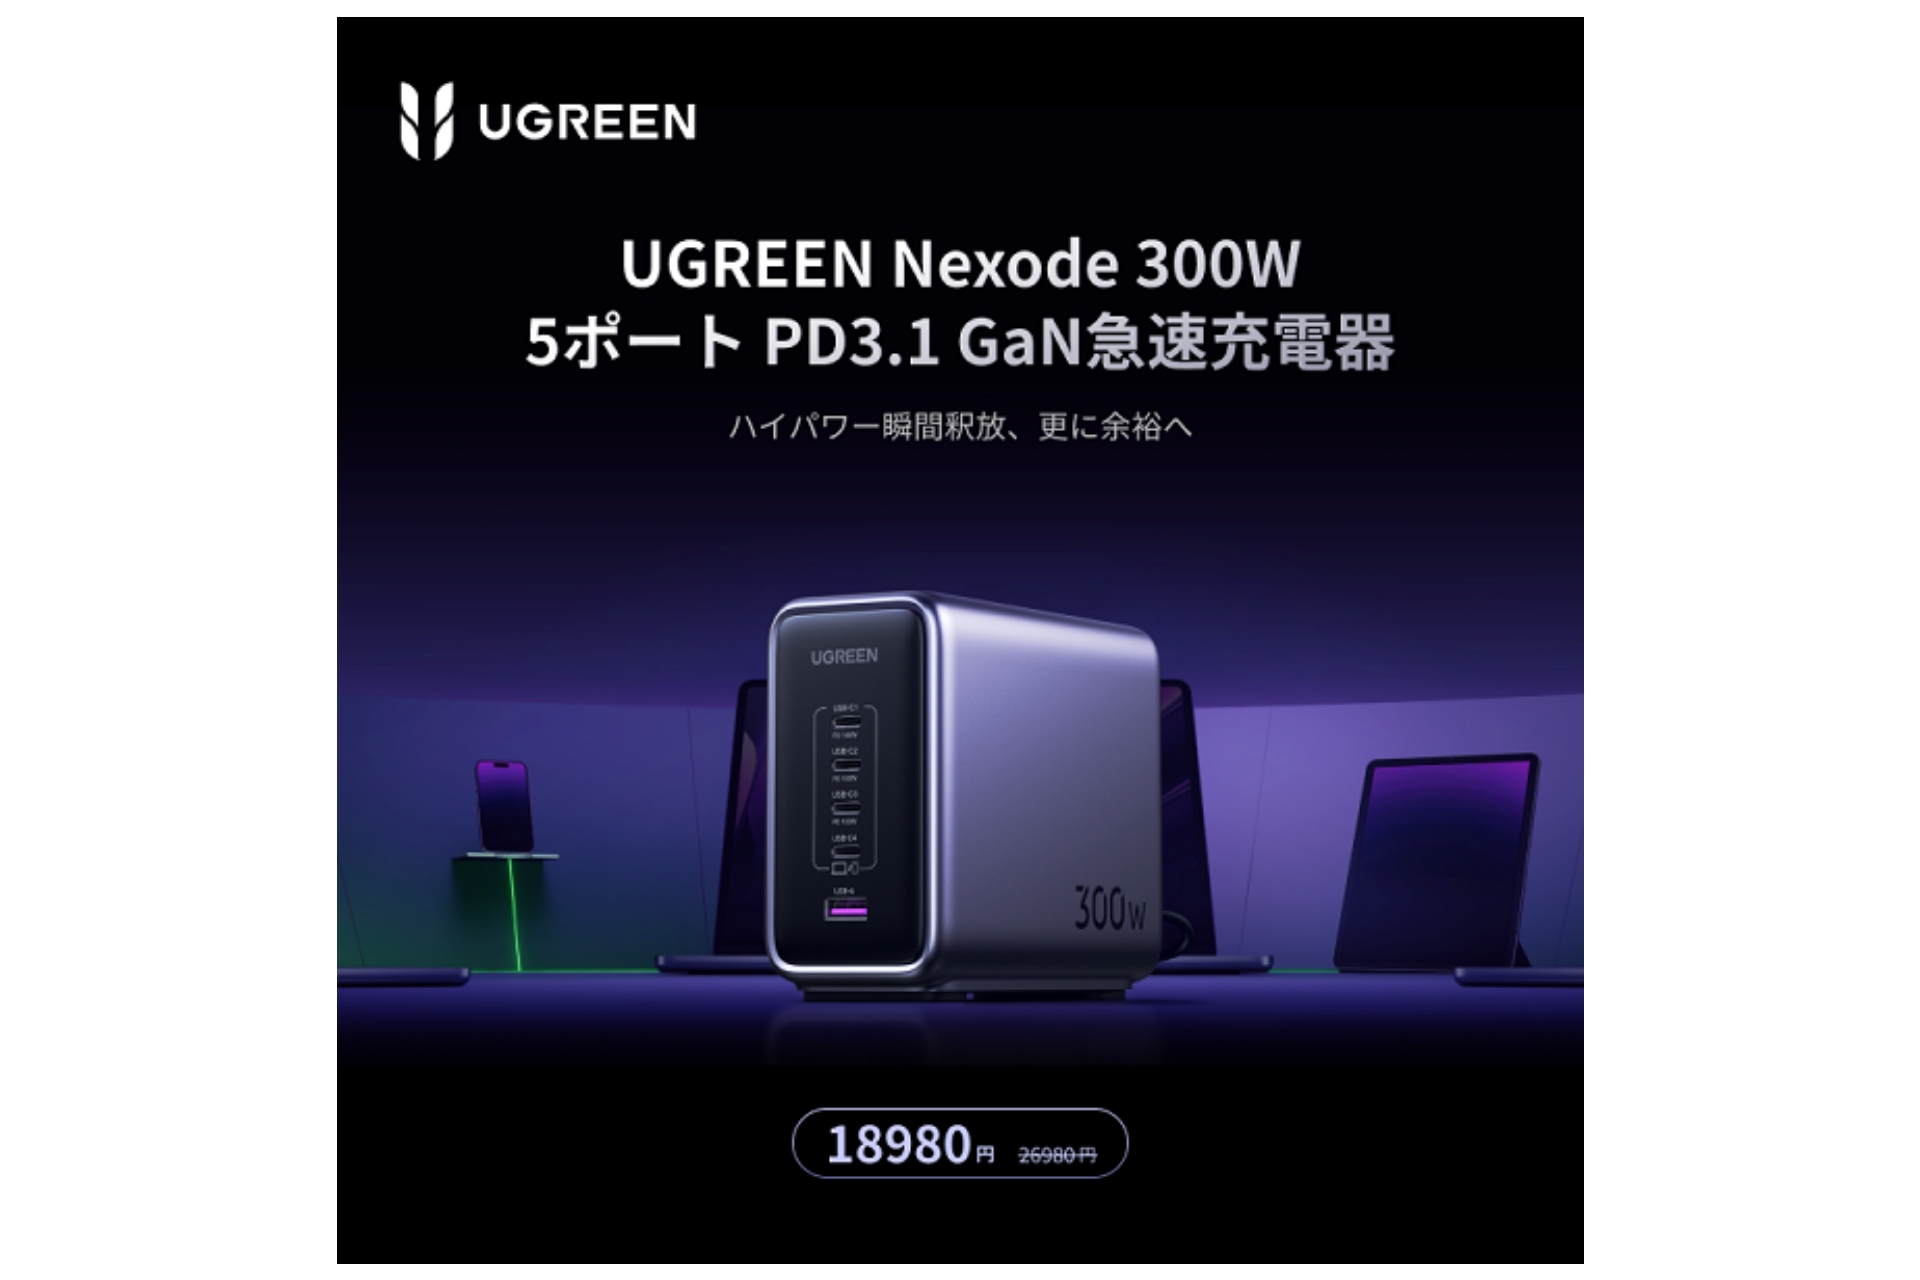 UGREEN、最大出力140Wのマルチポート充電器「UGREEN Nexode 300W」を